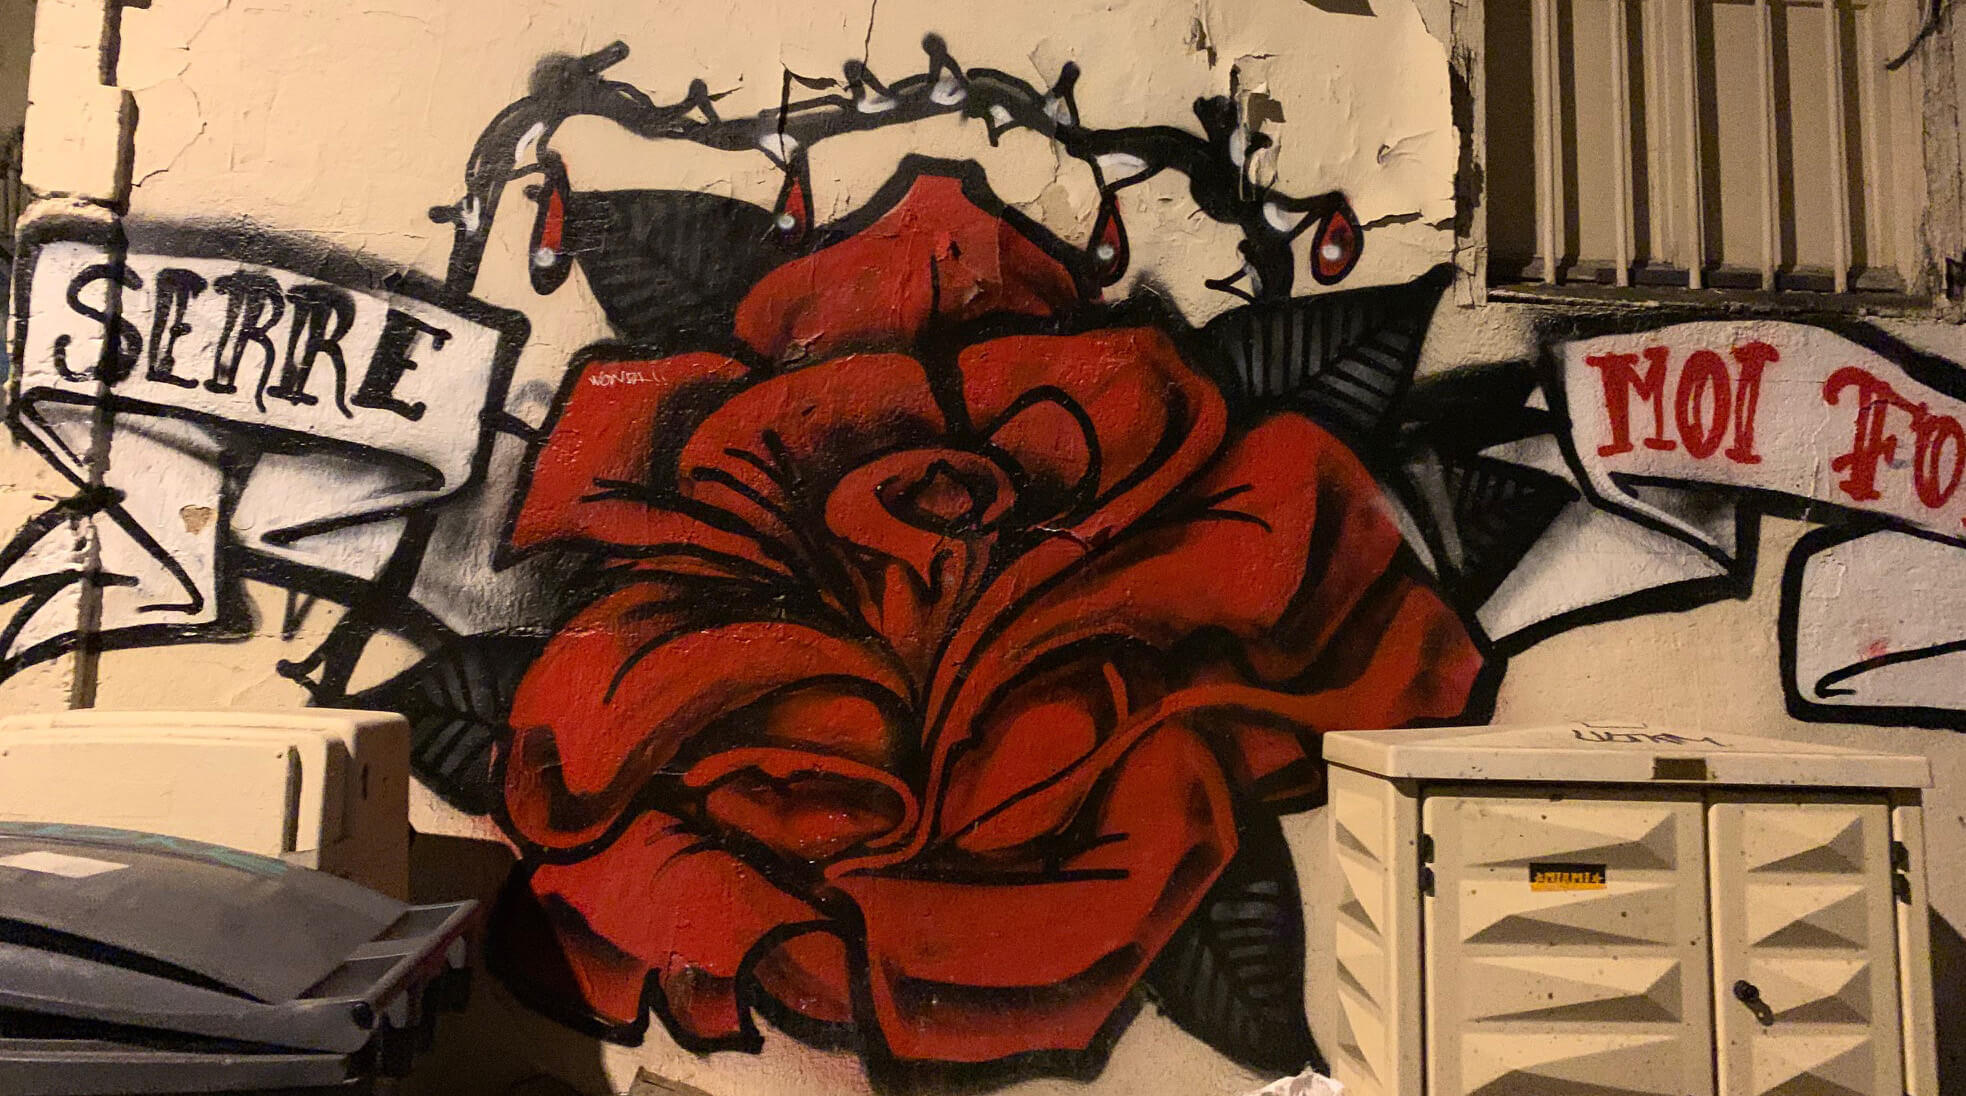 Take Time to Slow Down- Image of a Graffiti Rose